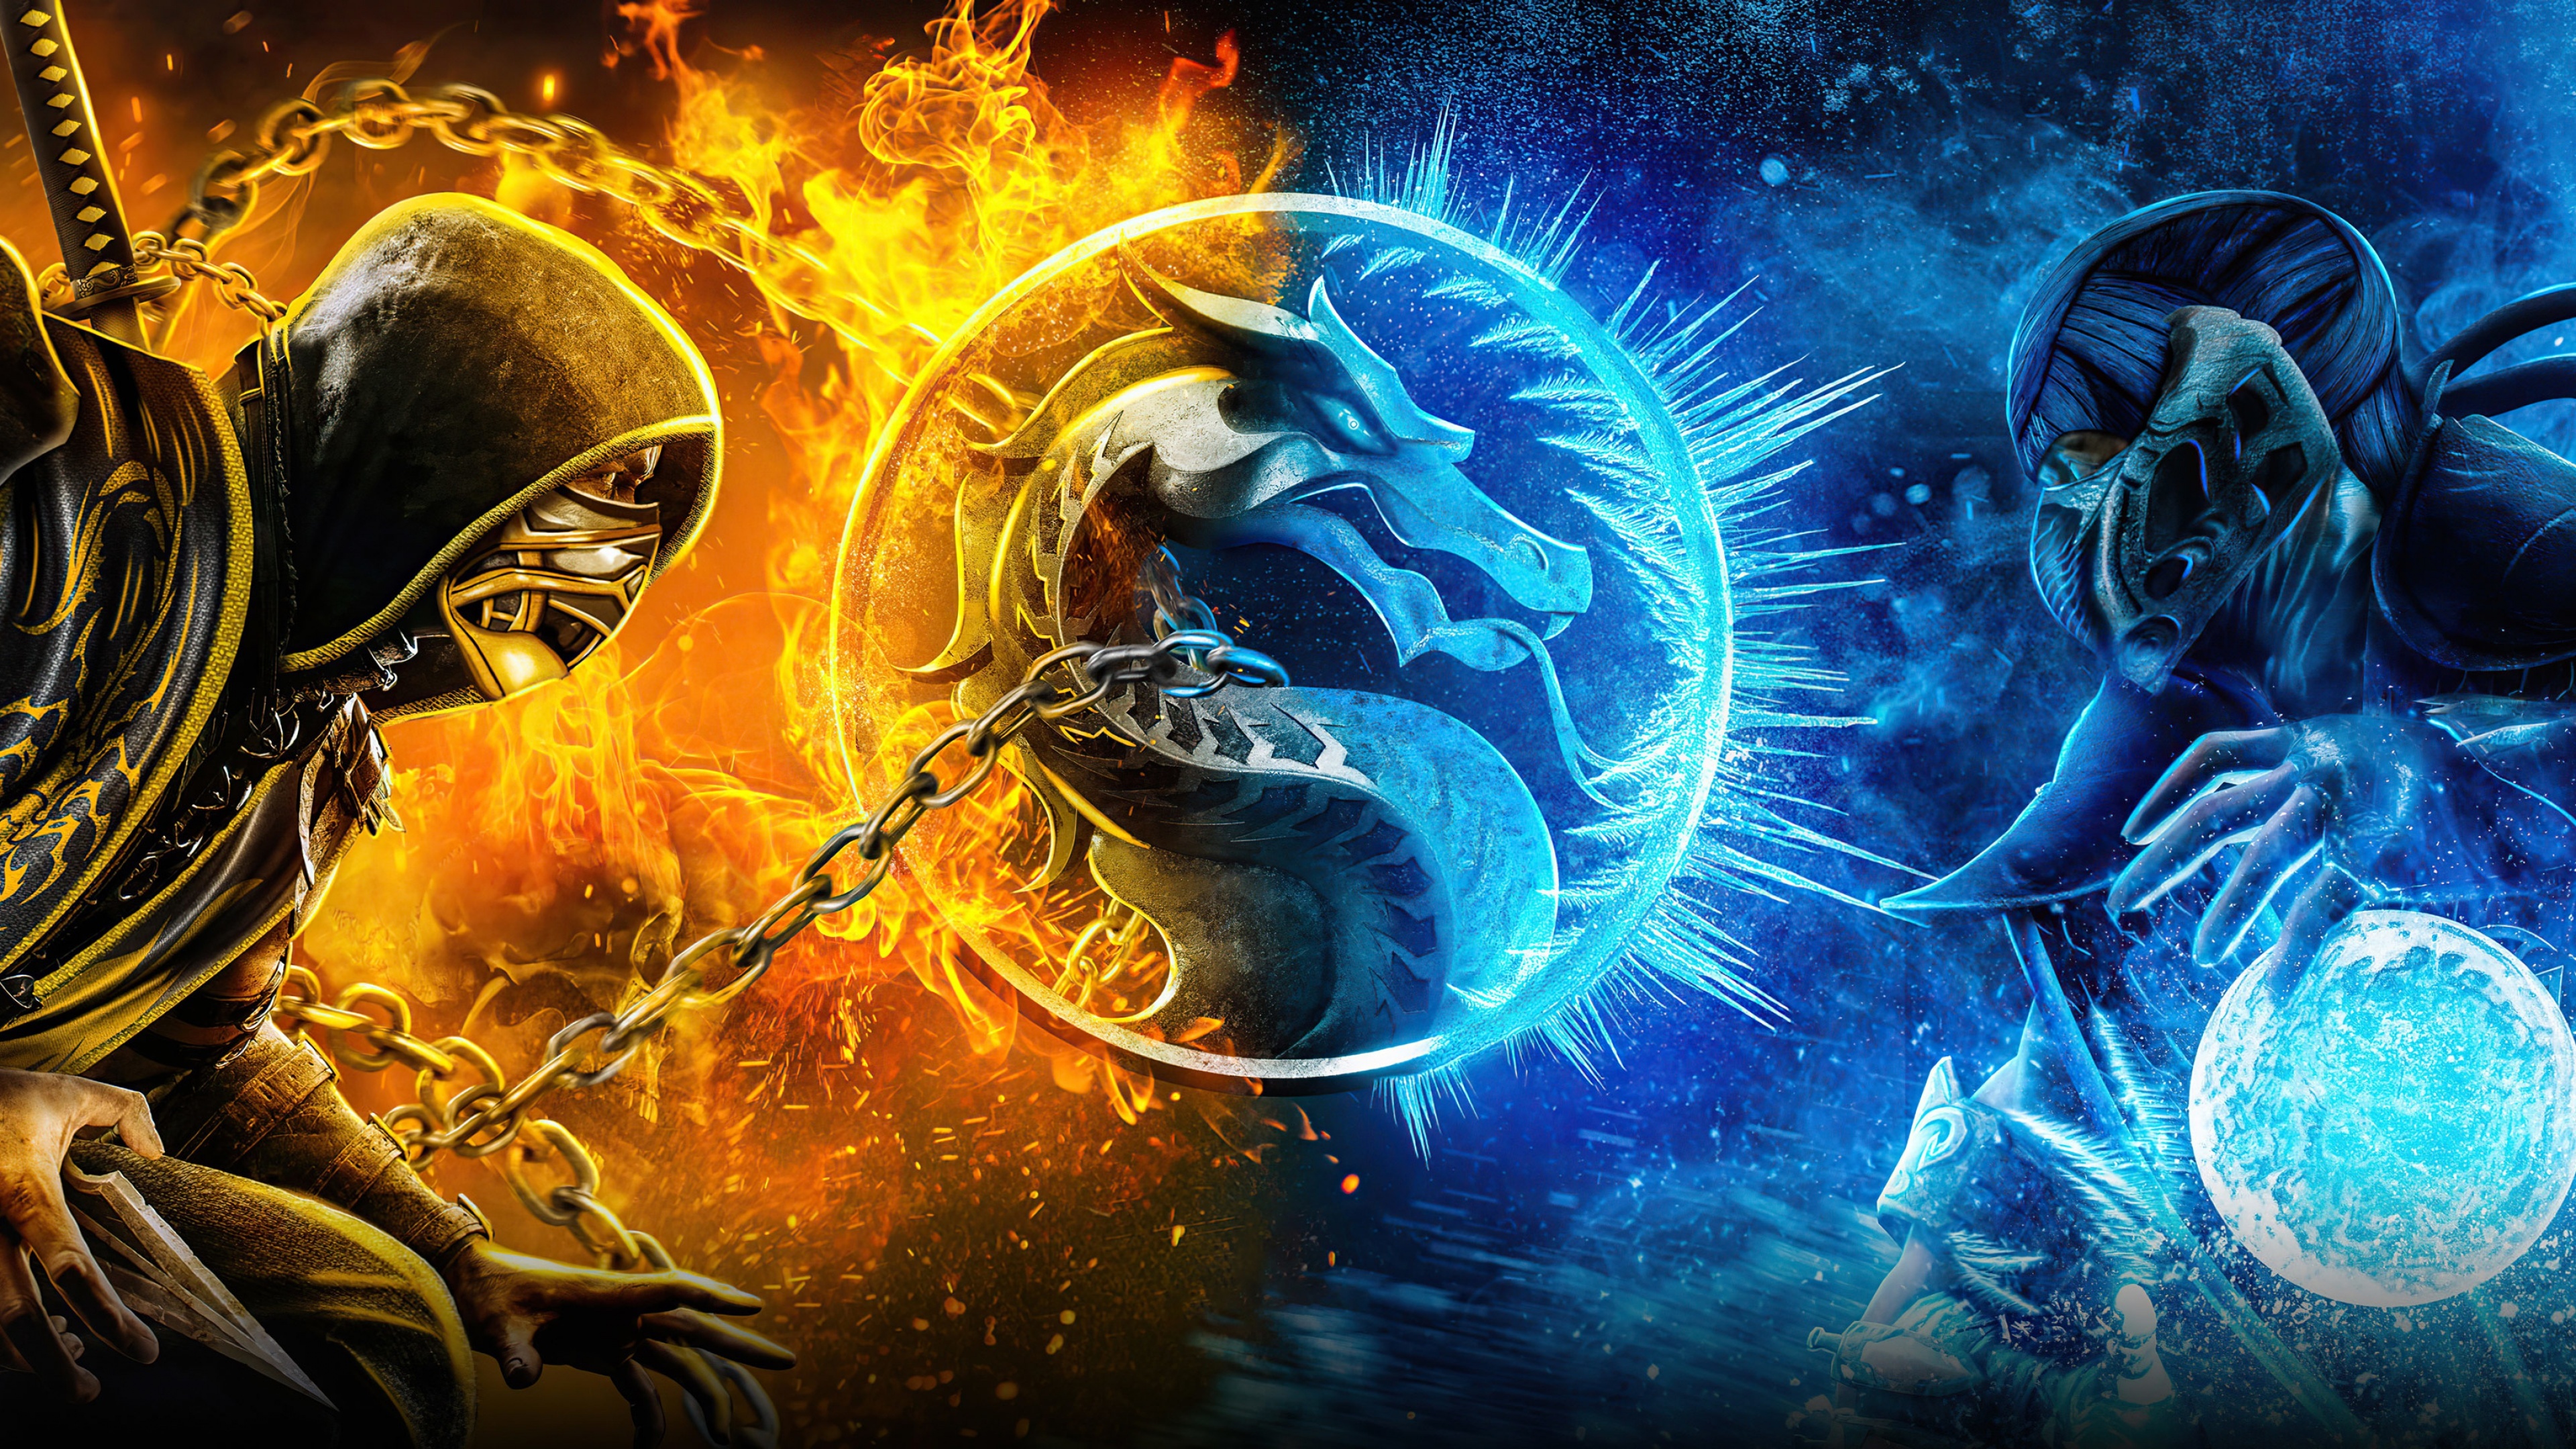 Mortal Kombat wallpaper, 4K 2021 movies, 3840x2160 4K Desktop